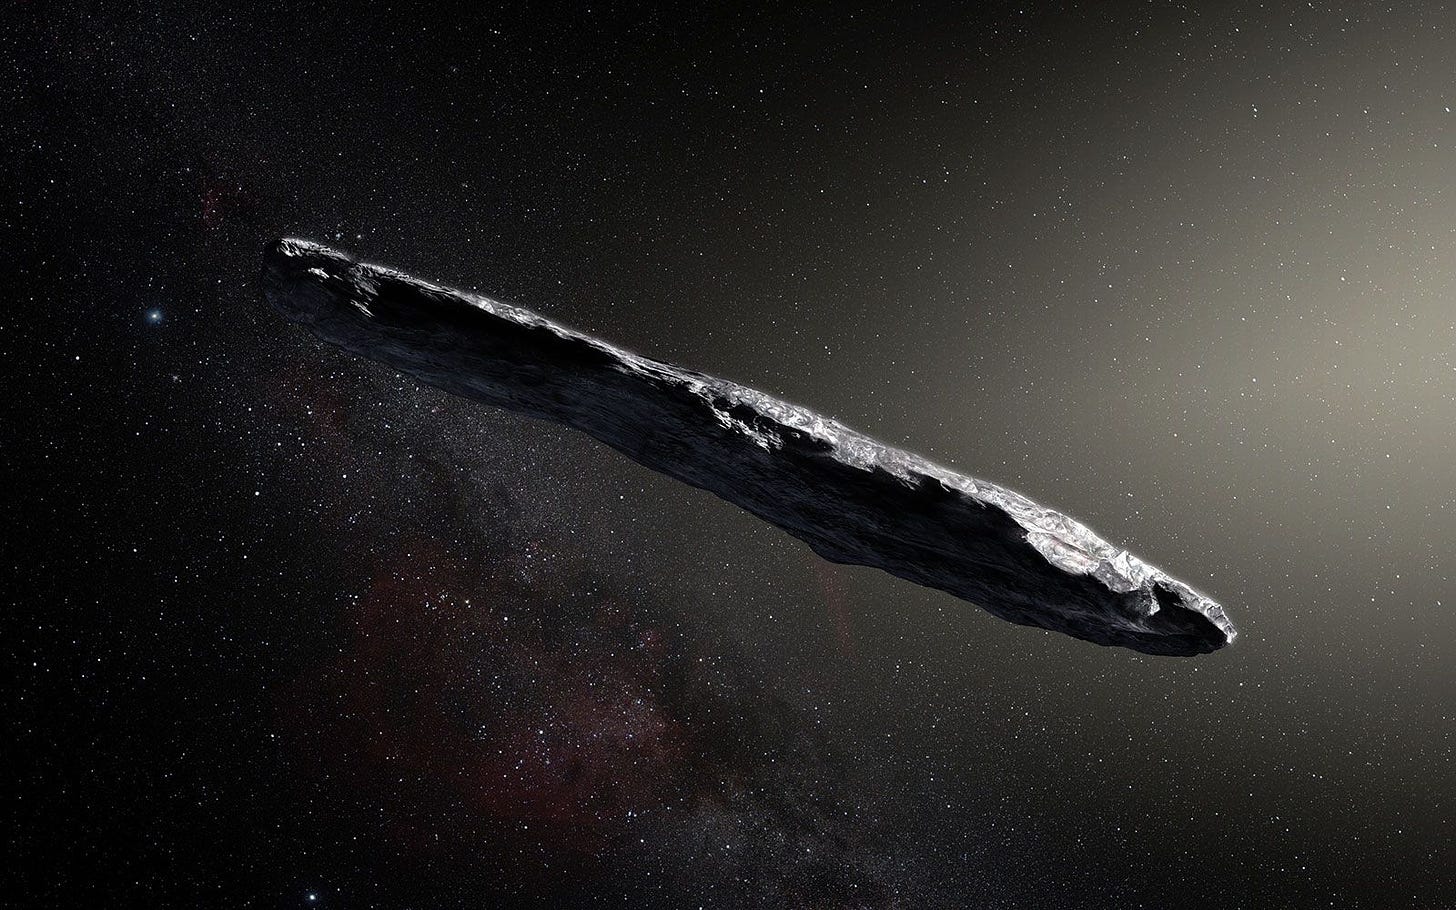 Interstellar object | Definition, Oumuamua, Borisov, & Facts | Britannica